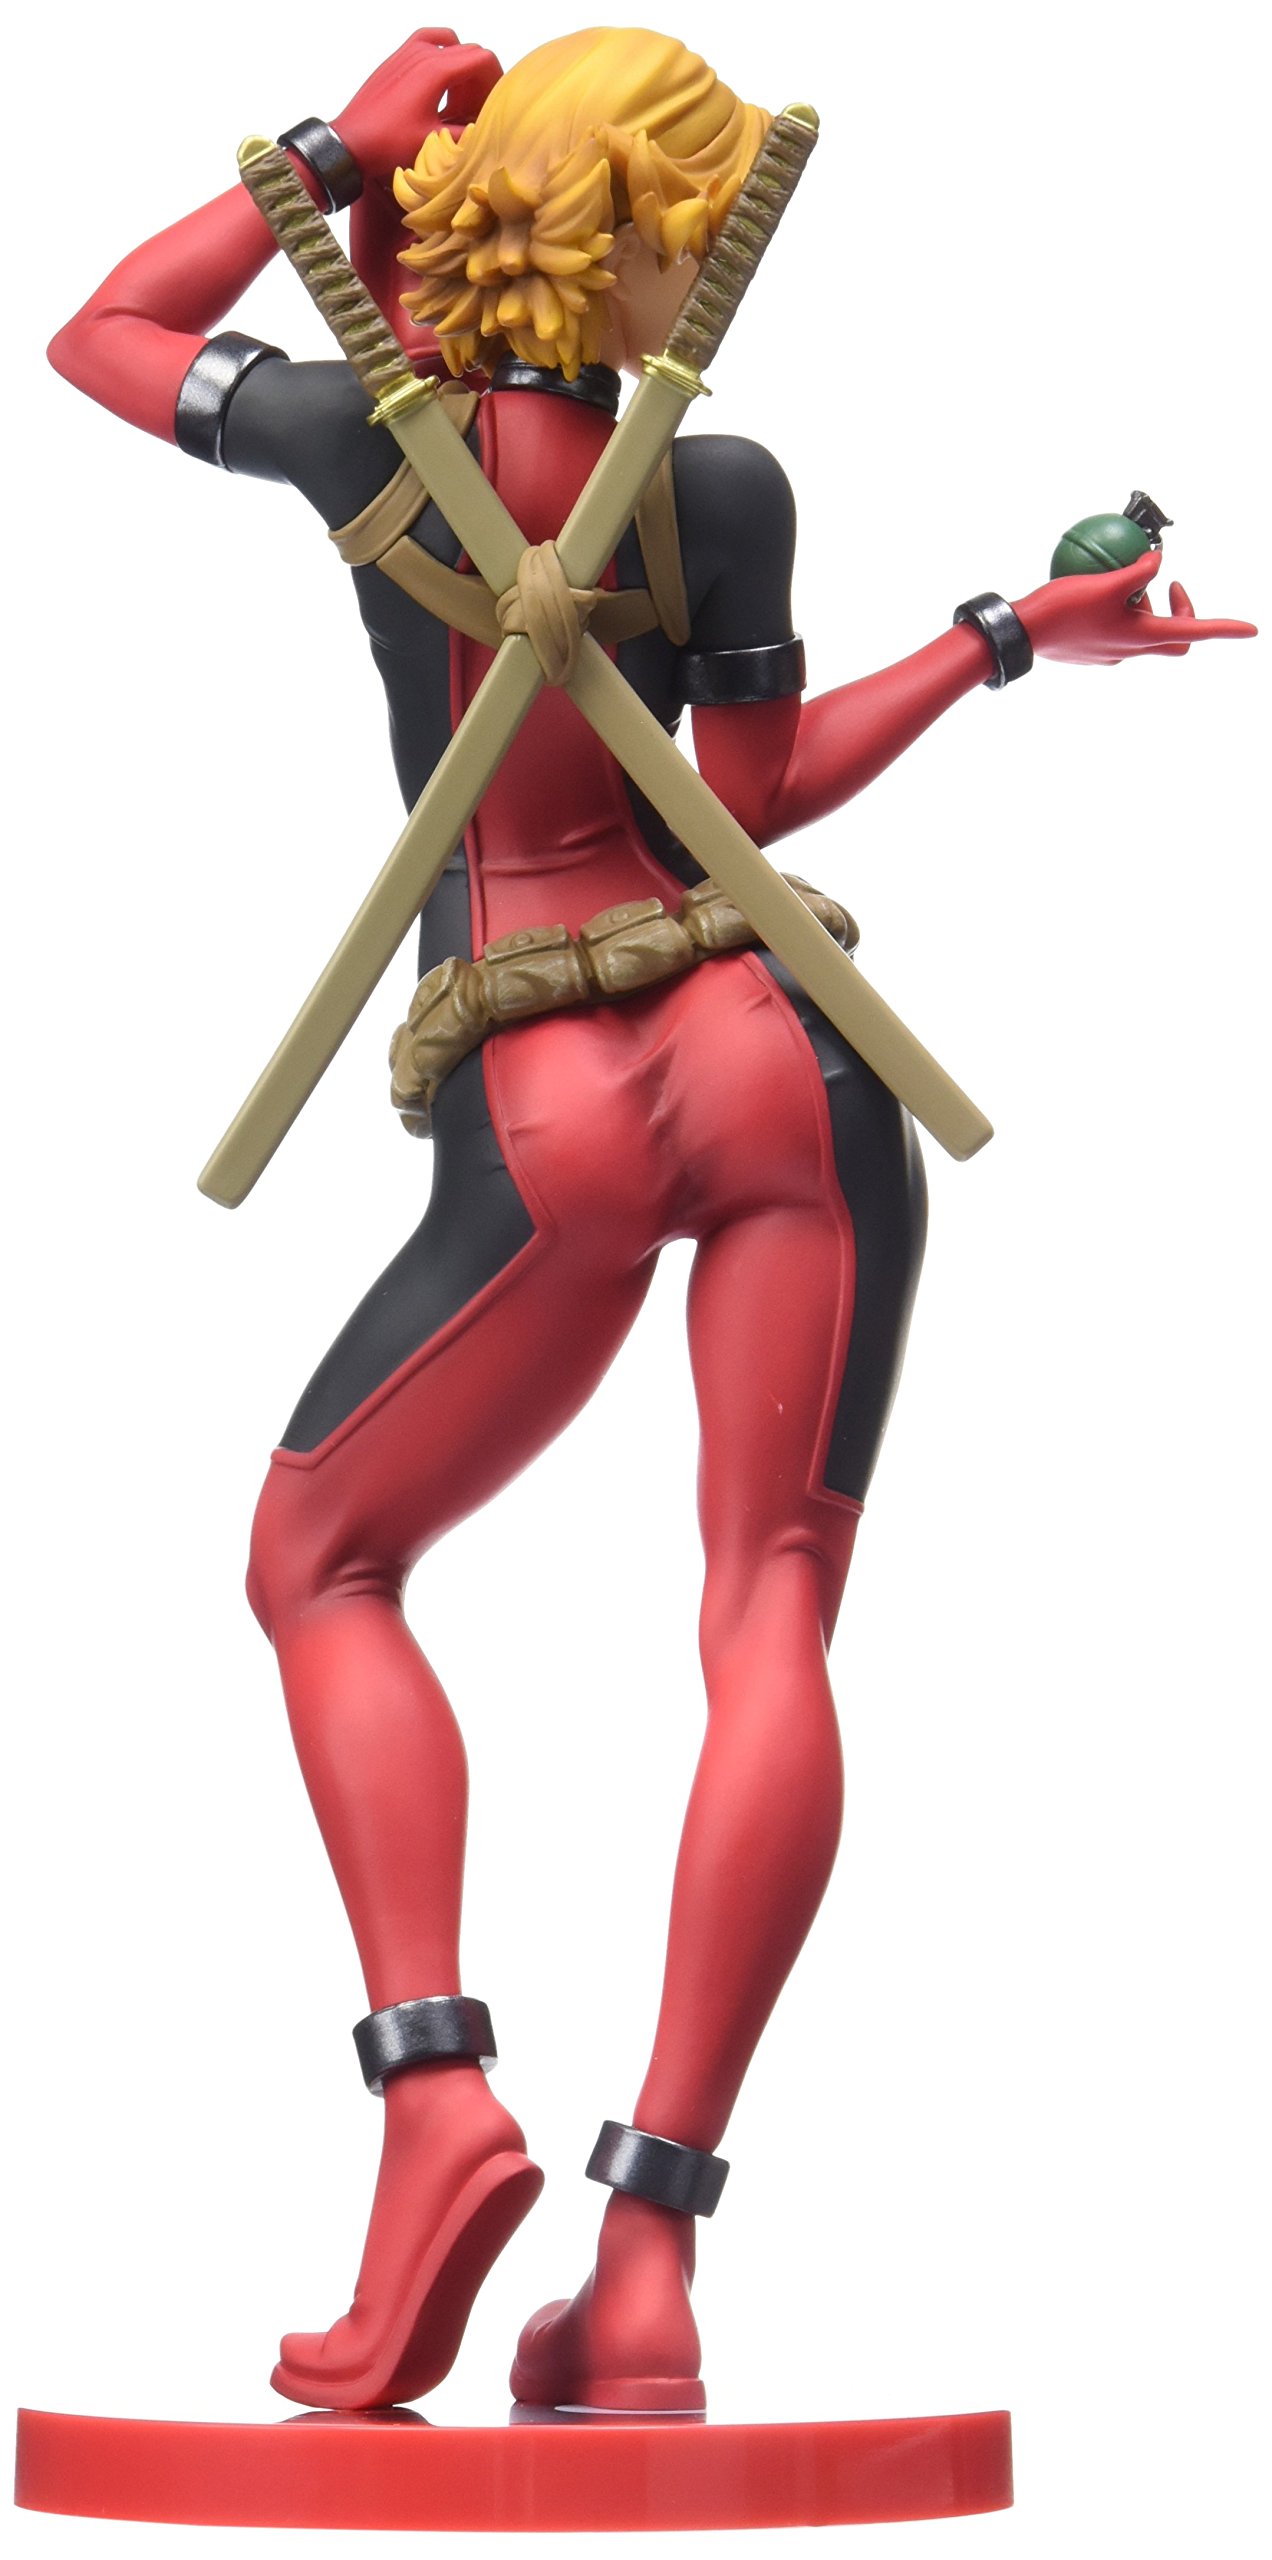 Kotobukiya Marvel: Lady Deadpool Bishoujo Statue